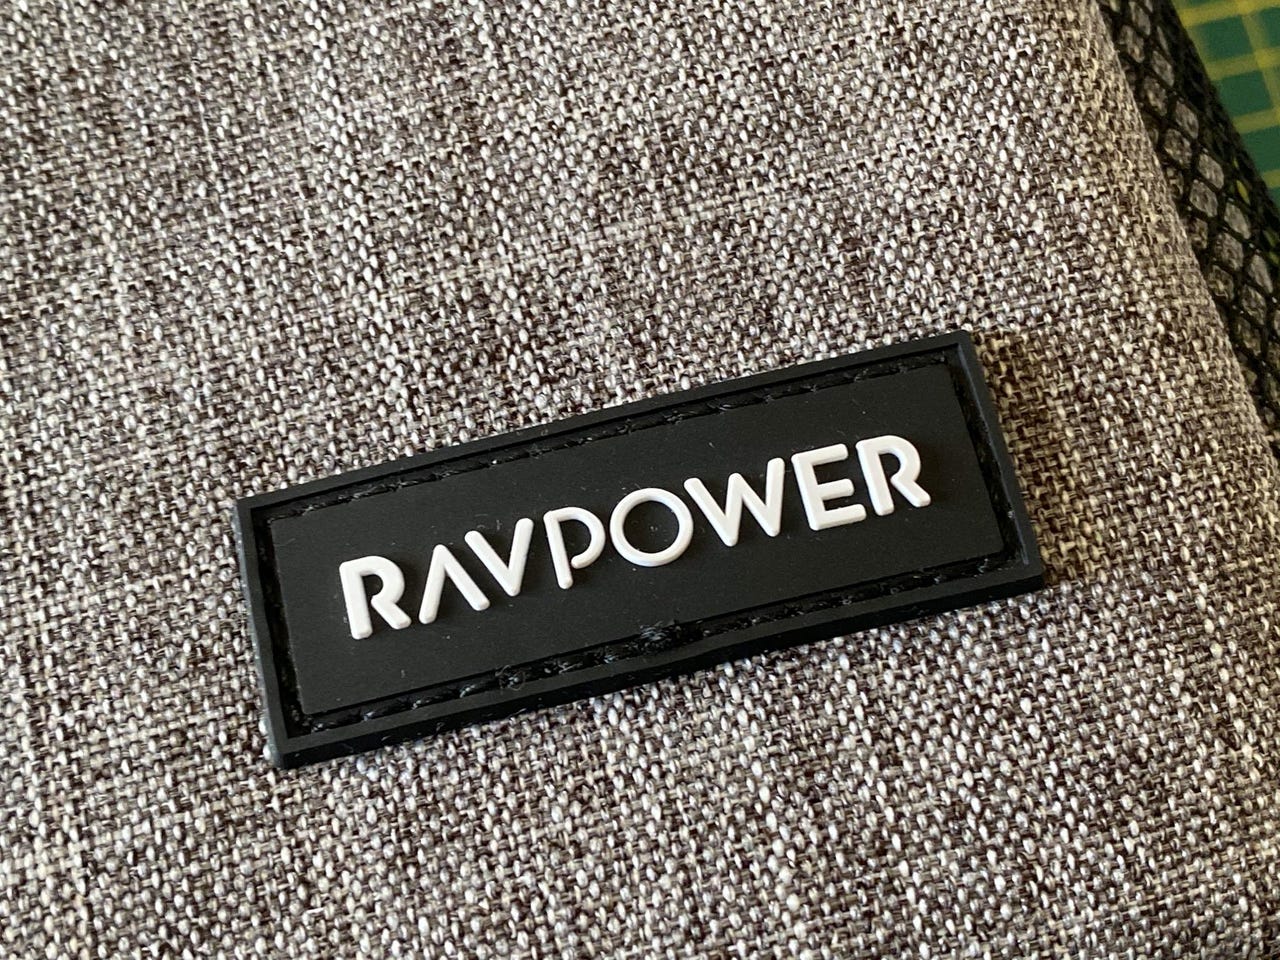 RAVPower RP-PB187 power station